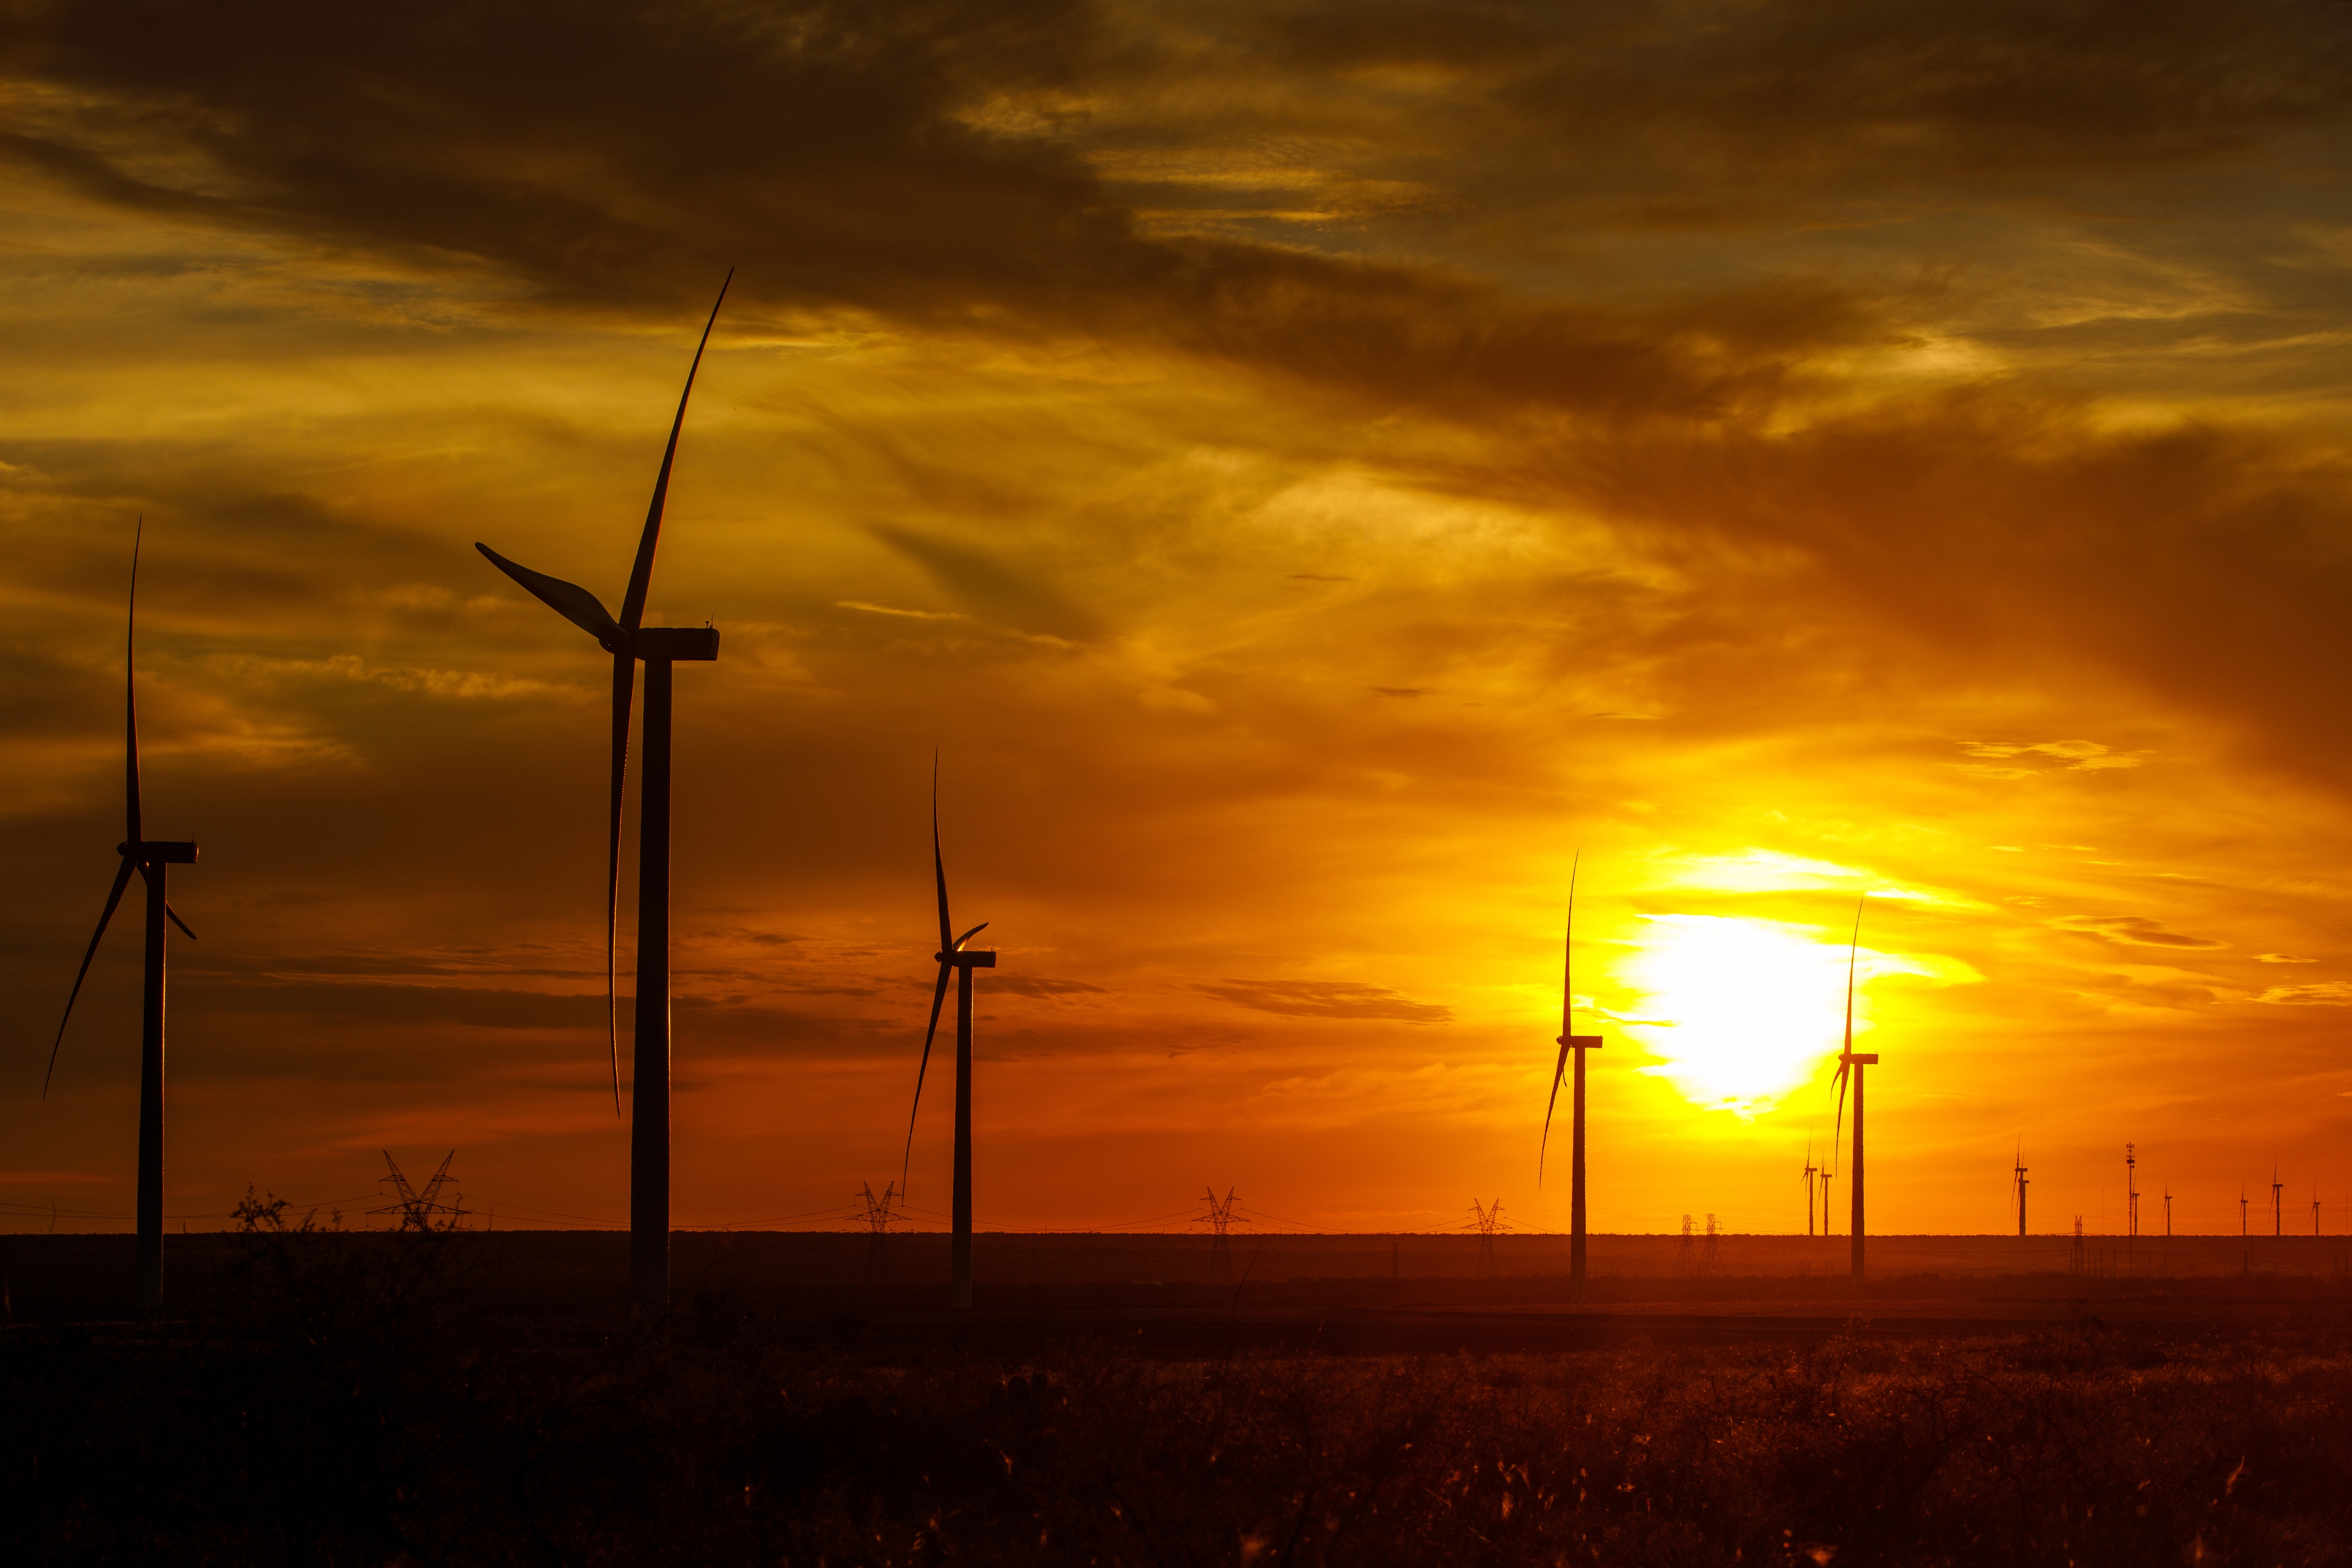 Amazon Wind Farm launches in Texas. 